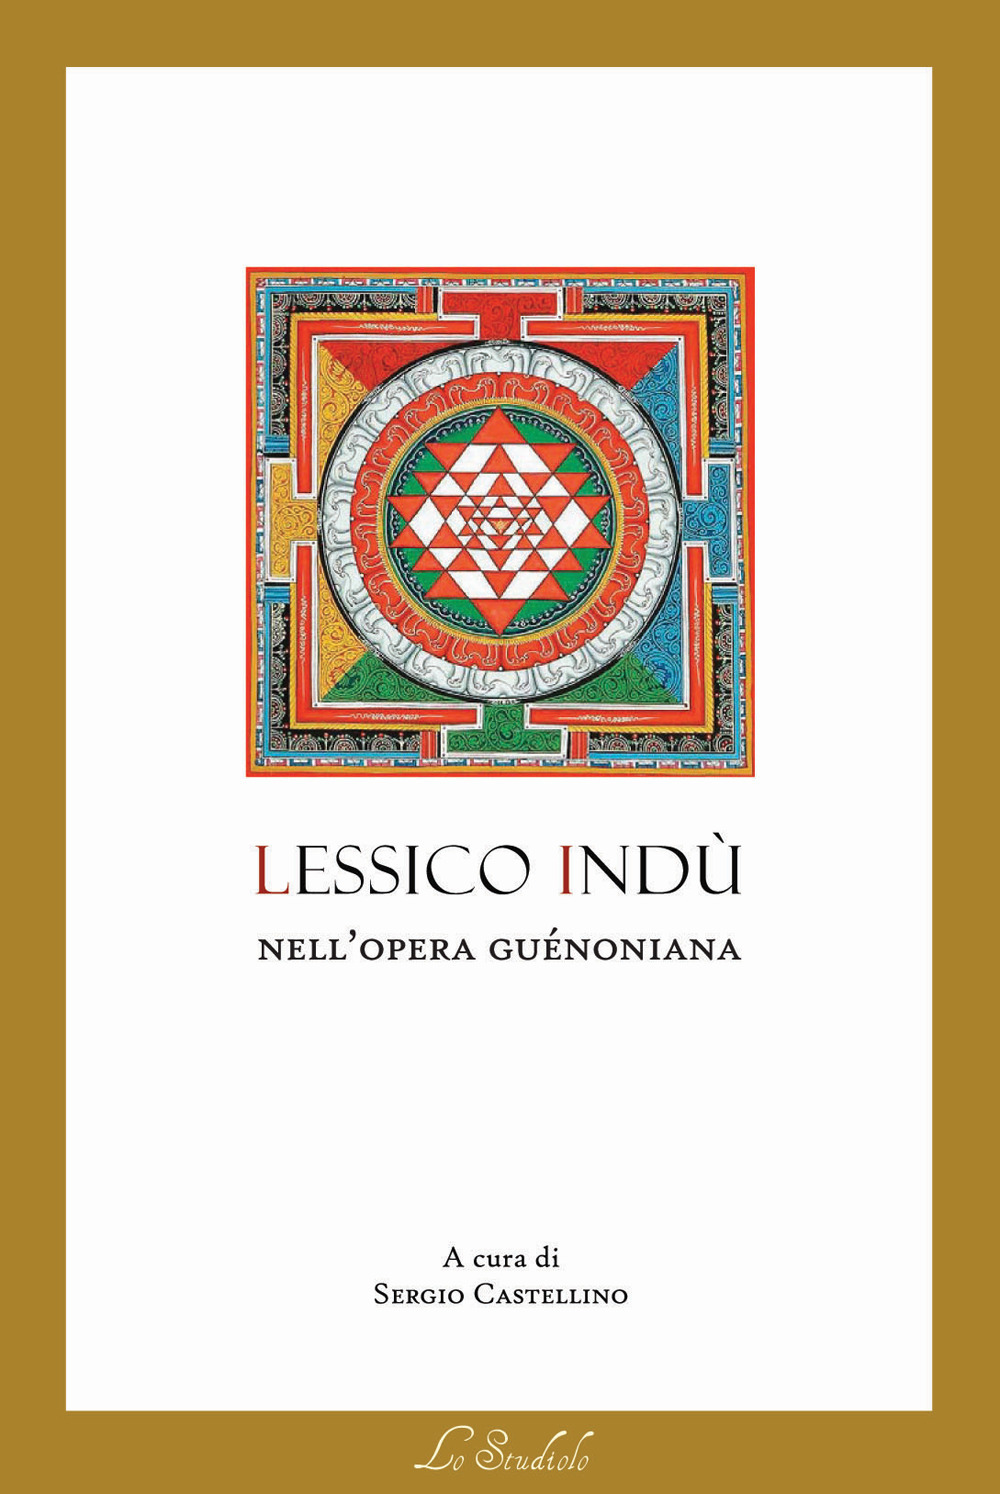 Image of Lessico indù nell'opera guénoniana